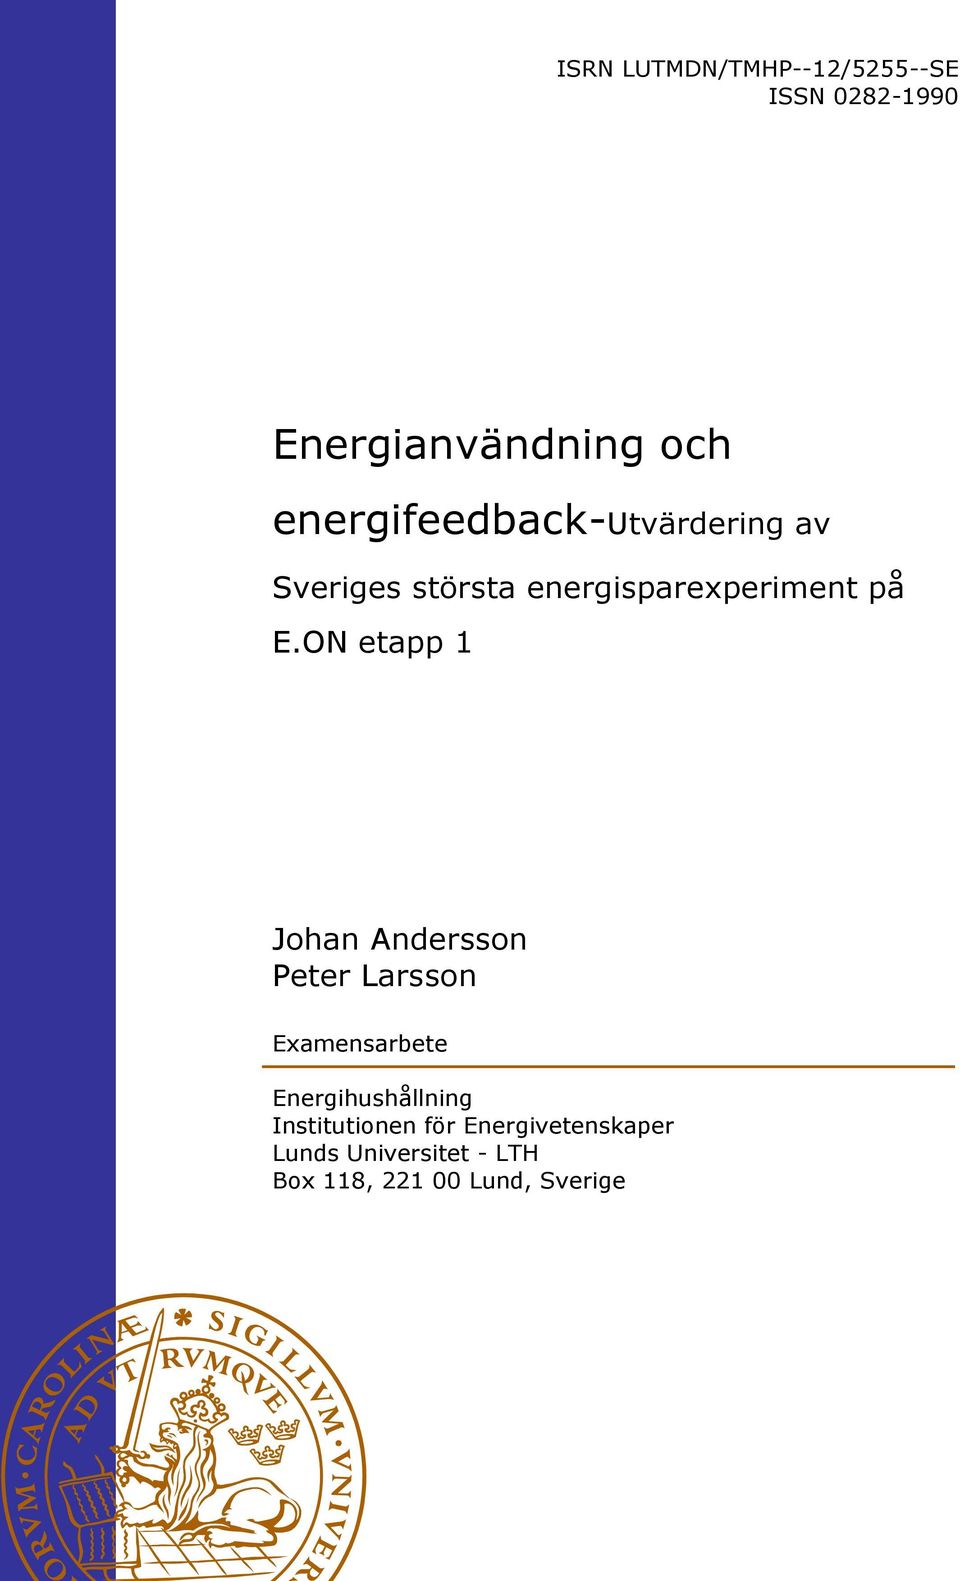 ON etapp 1 Johan Andersson Peter Larsson Examensarbete Energihushållning